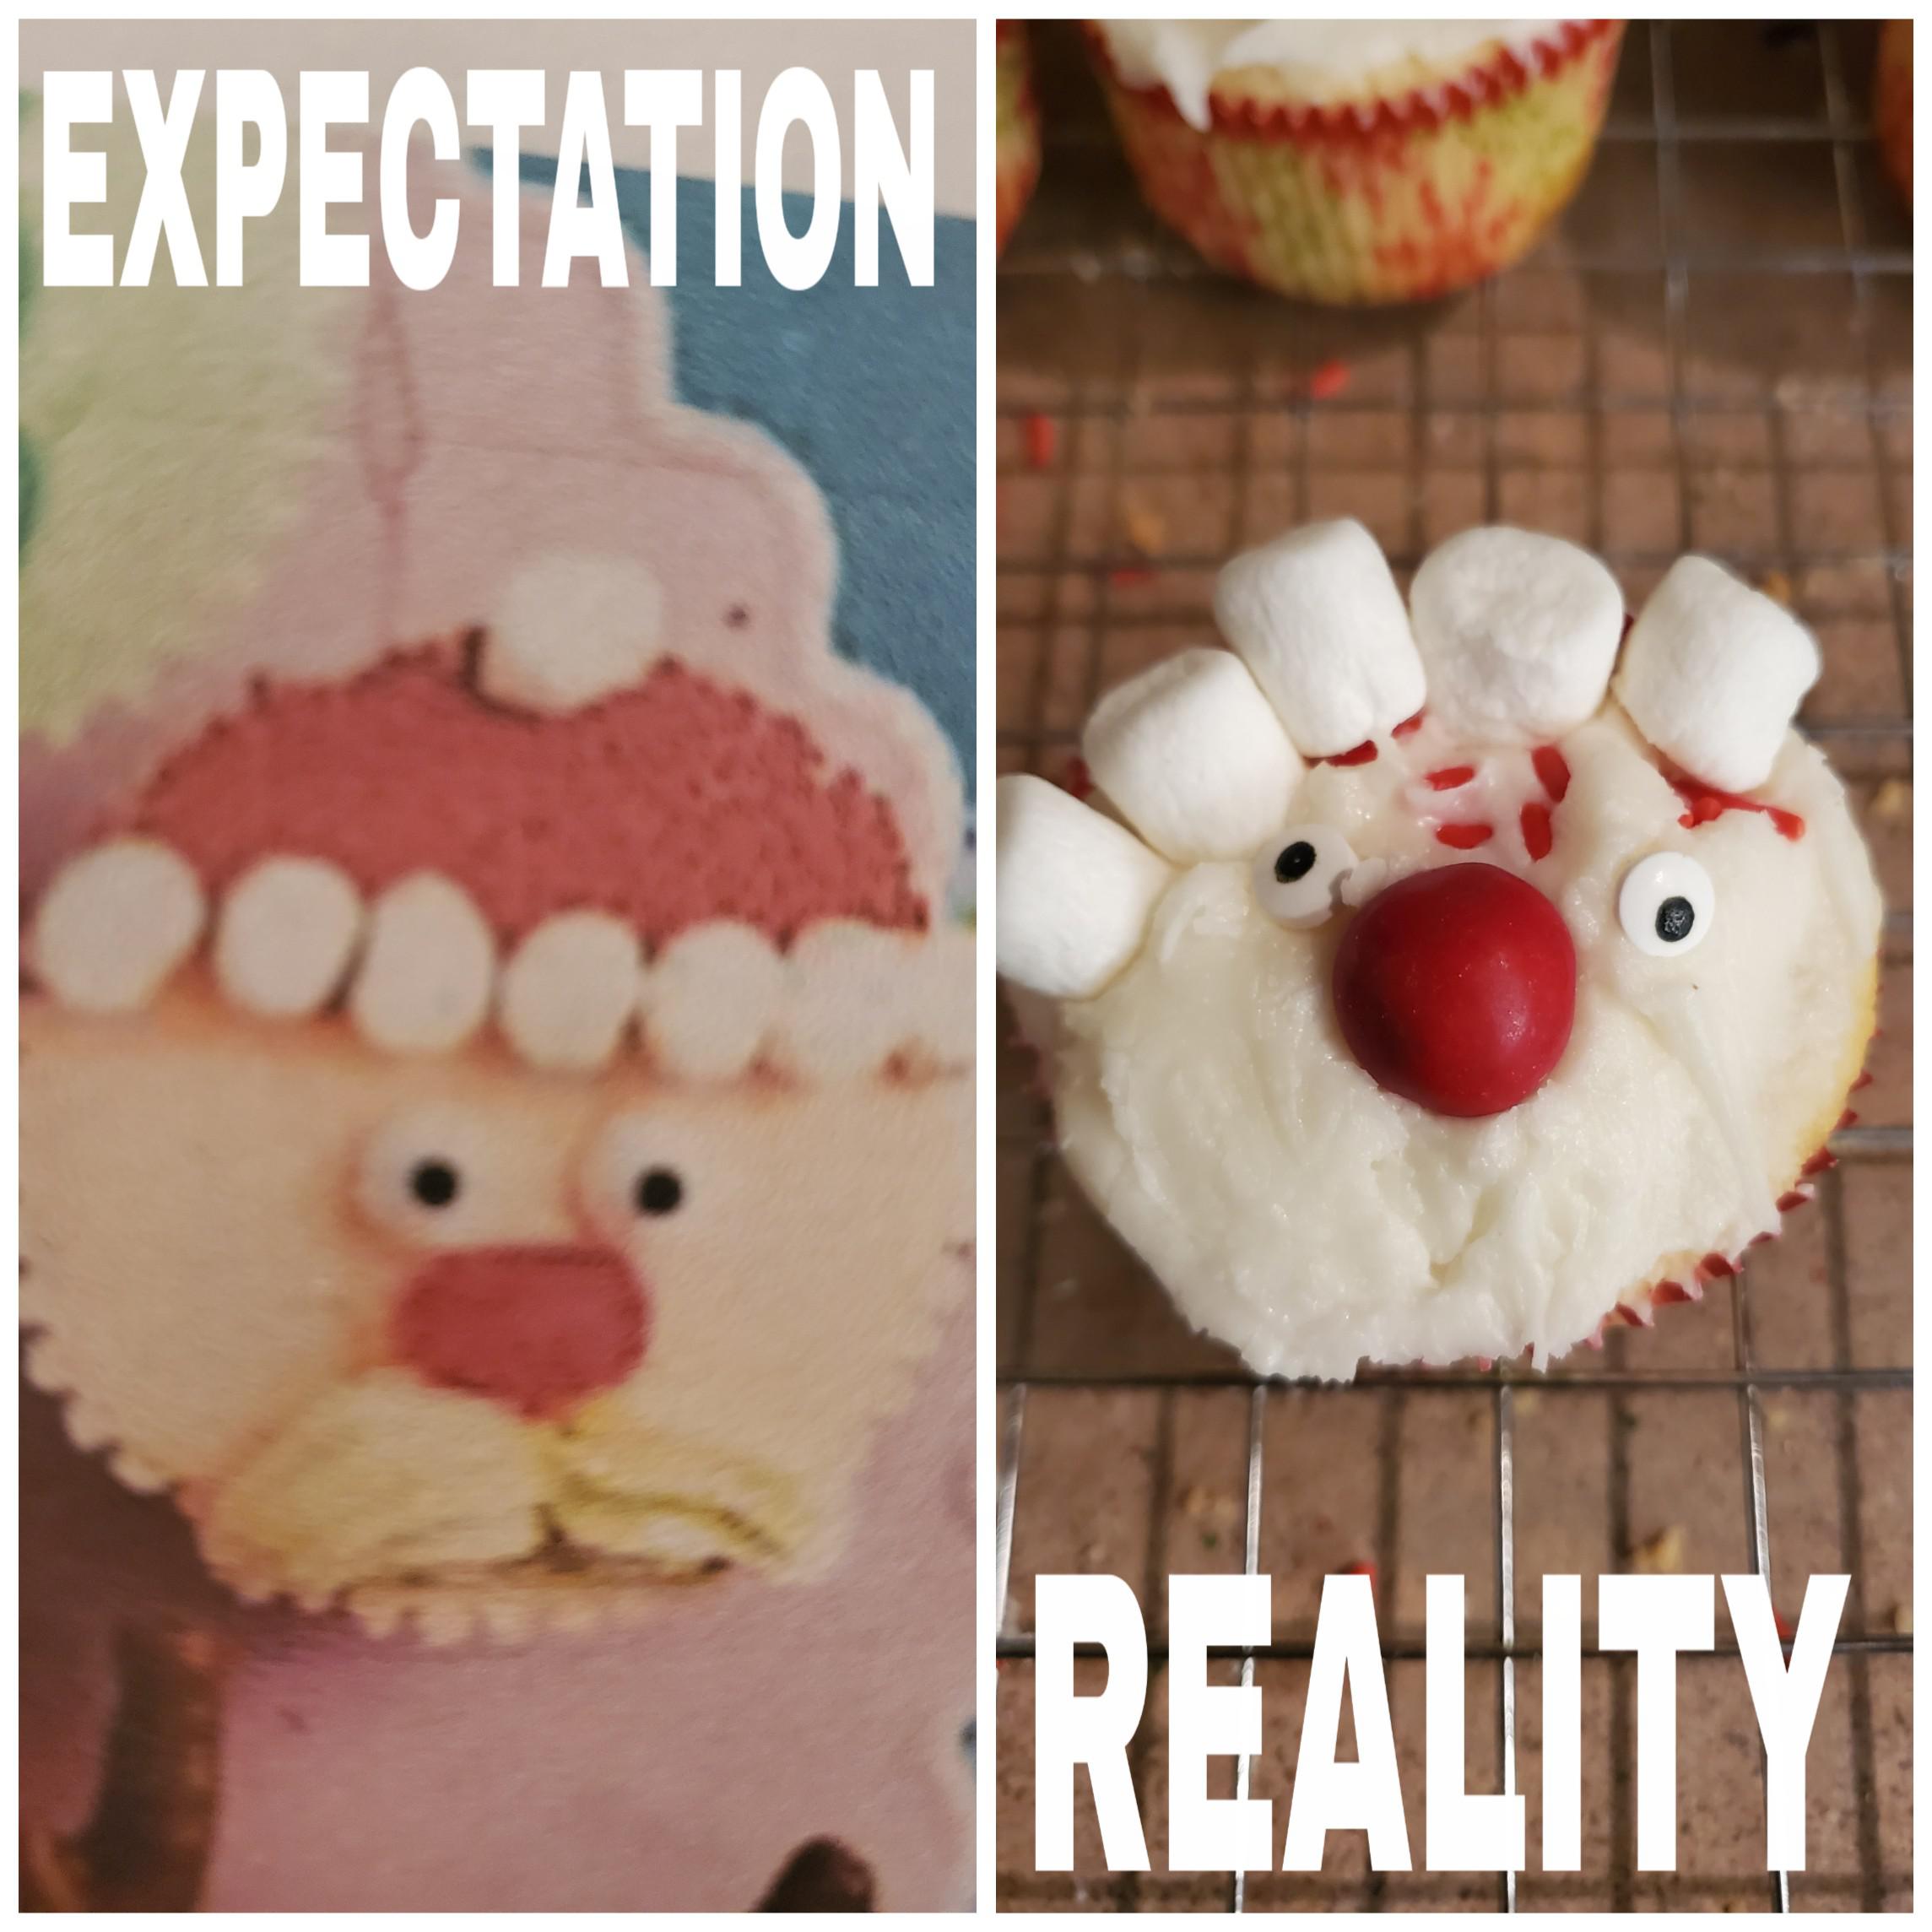 cupcake - Expectation Reality